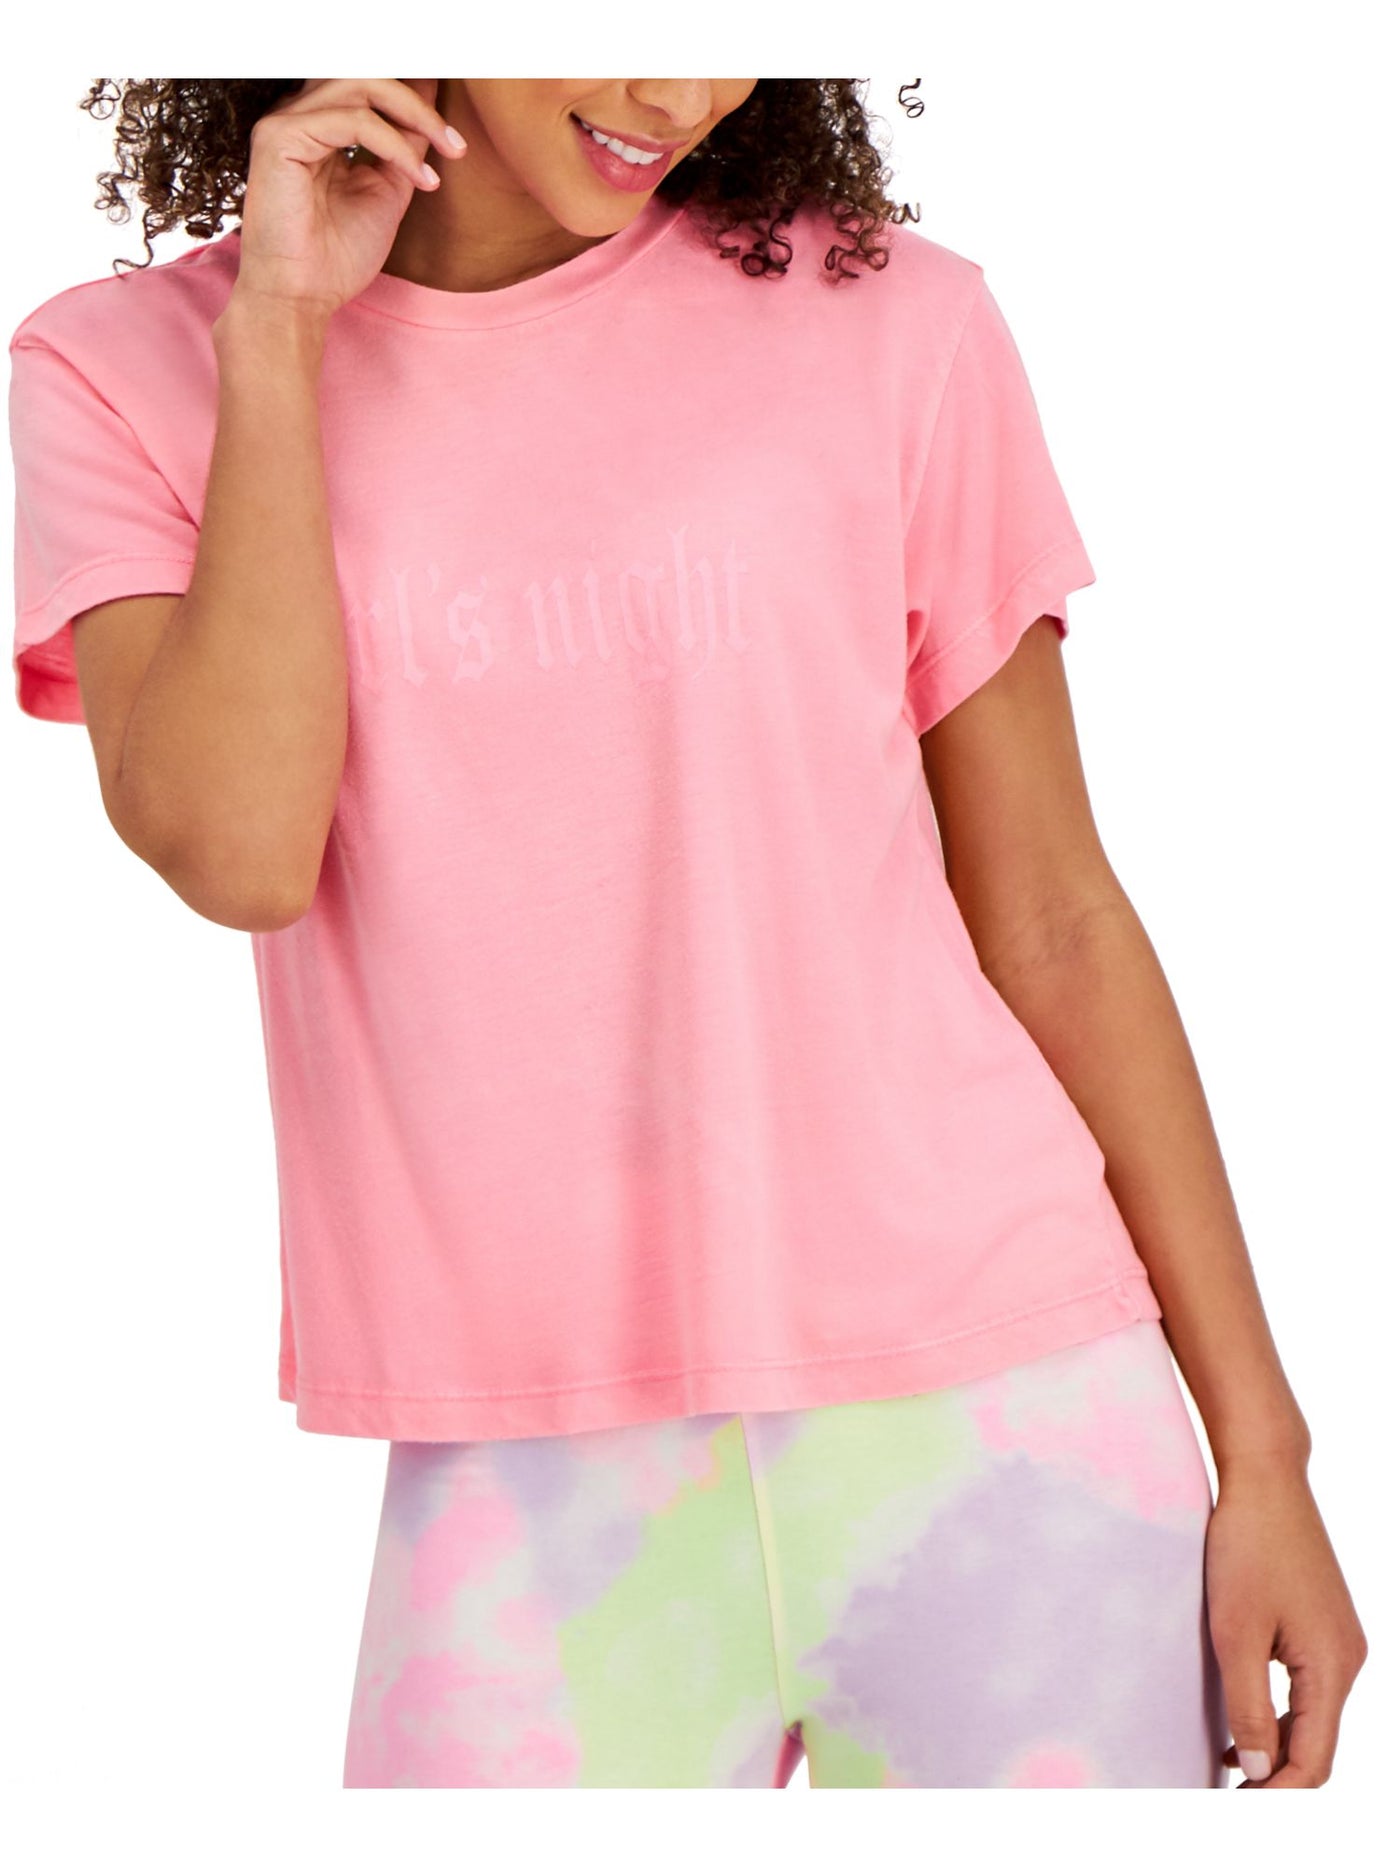 JENNI Intimates Pink Sleep Shirt Pajama Top S